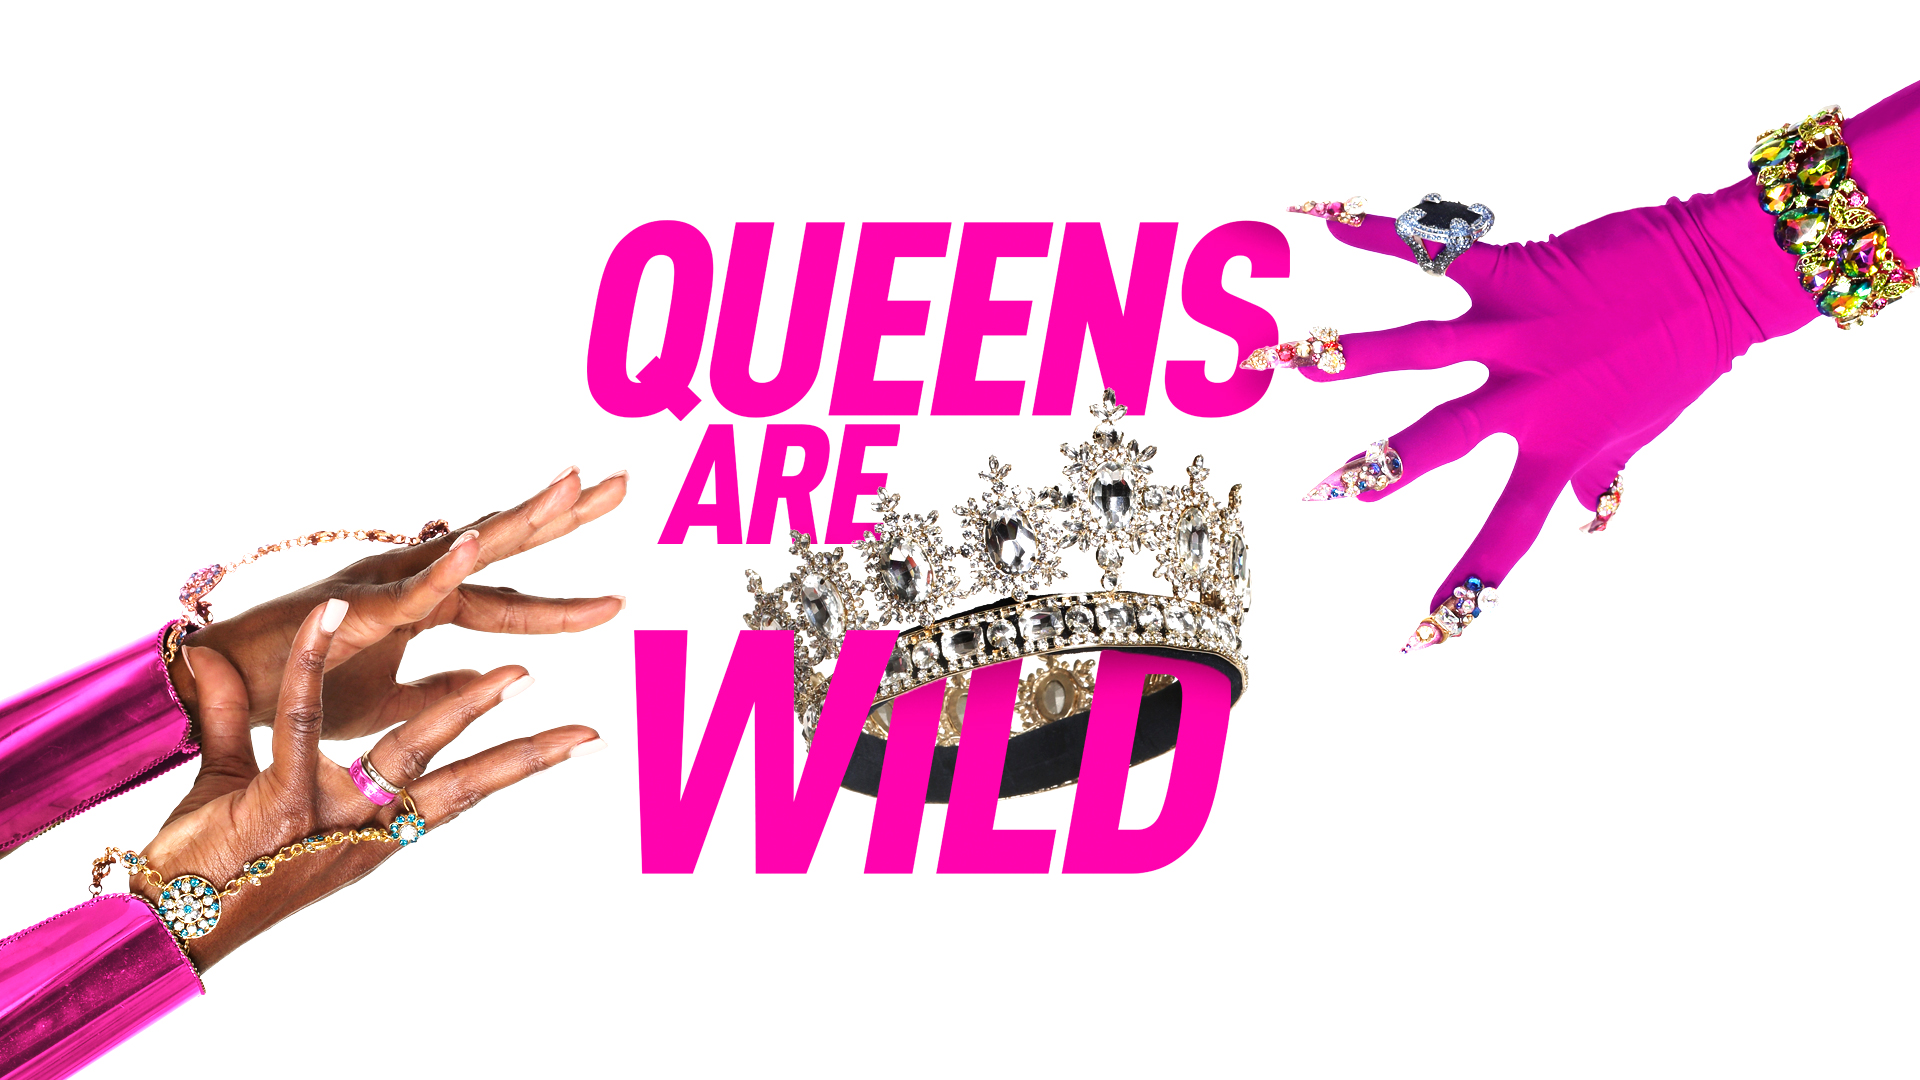 rupaul's drag race wallpaper,pink,text,dance,street dance,graphic design